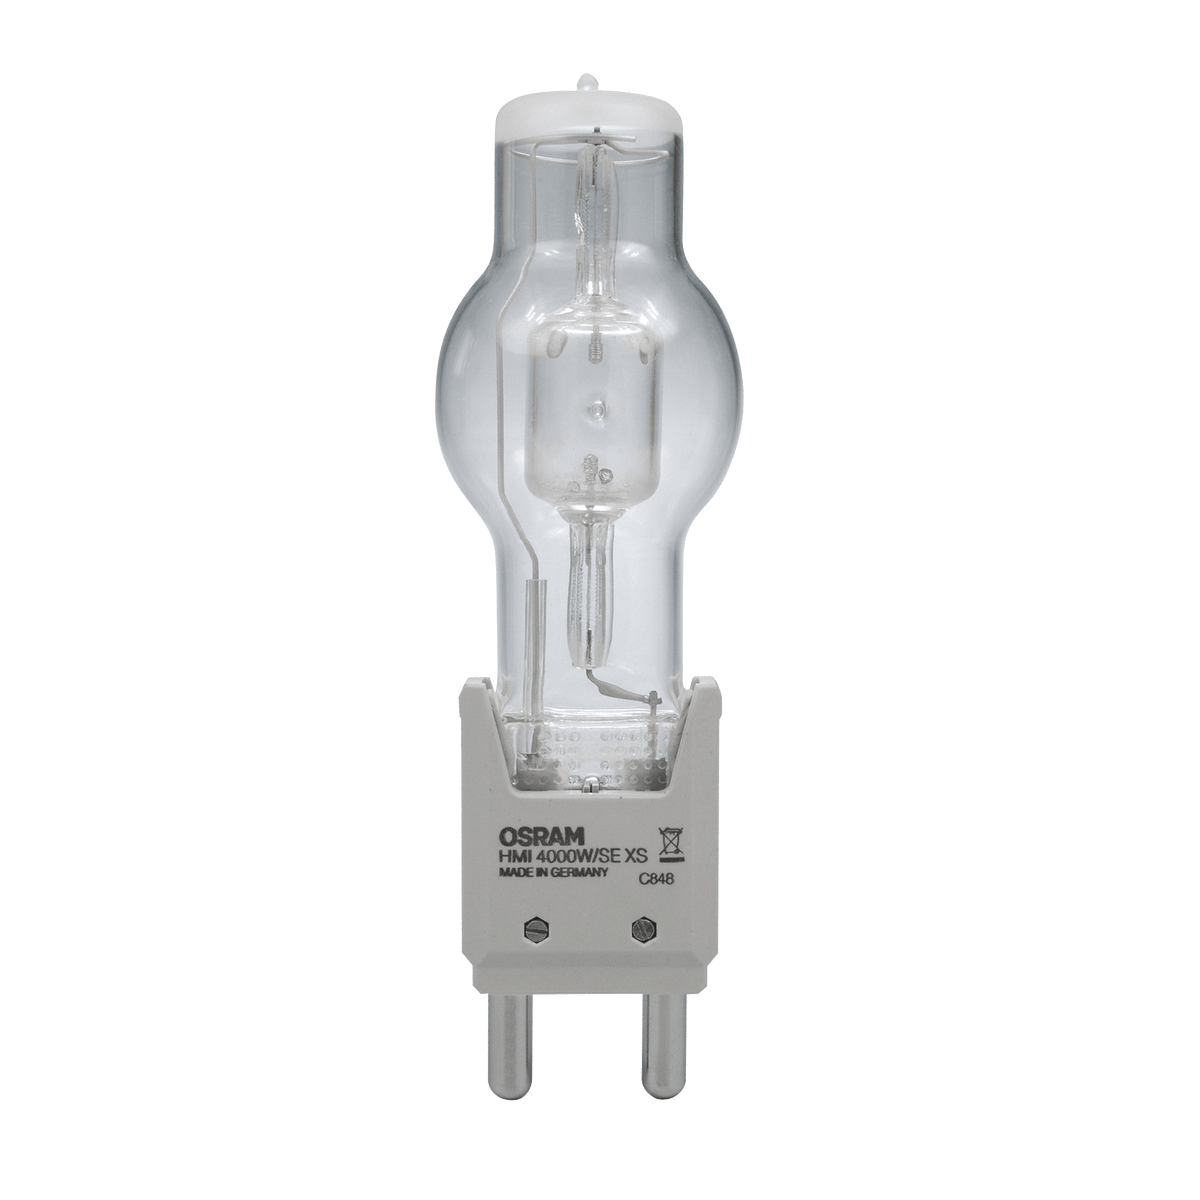 OSRAM HMI 54321 4000W/SE XS Lamp